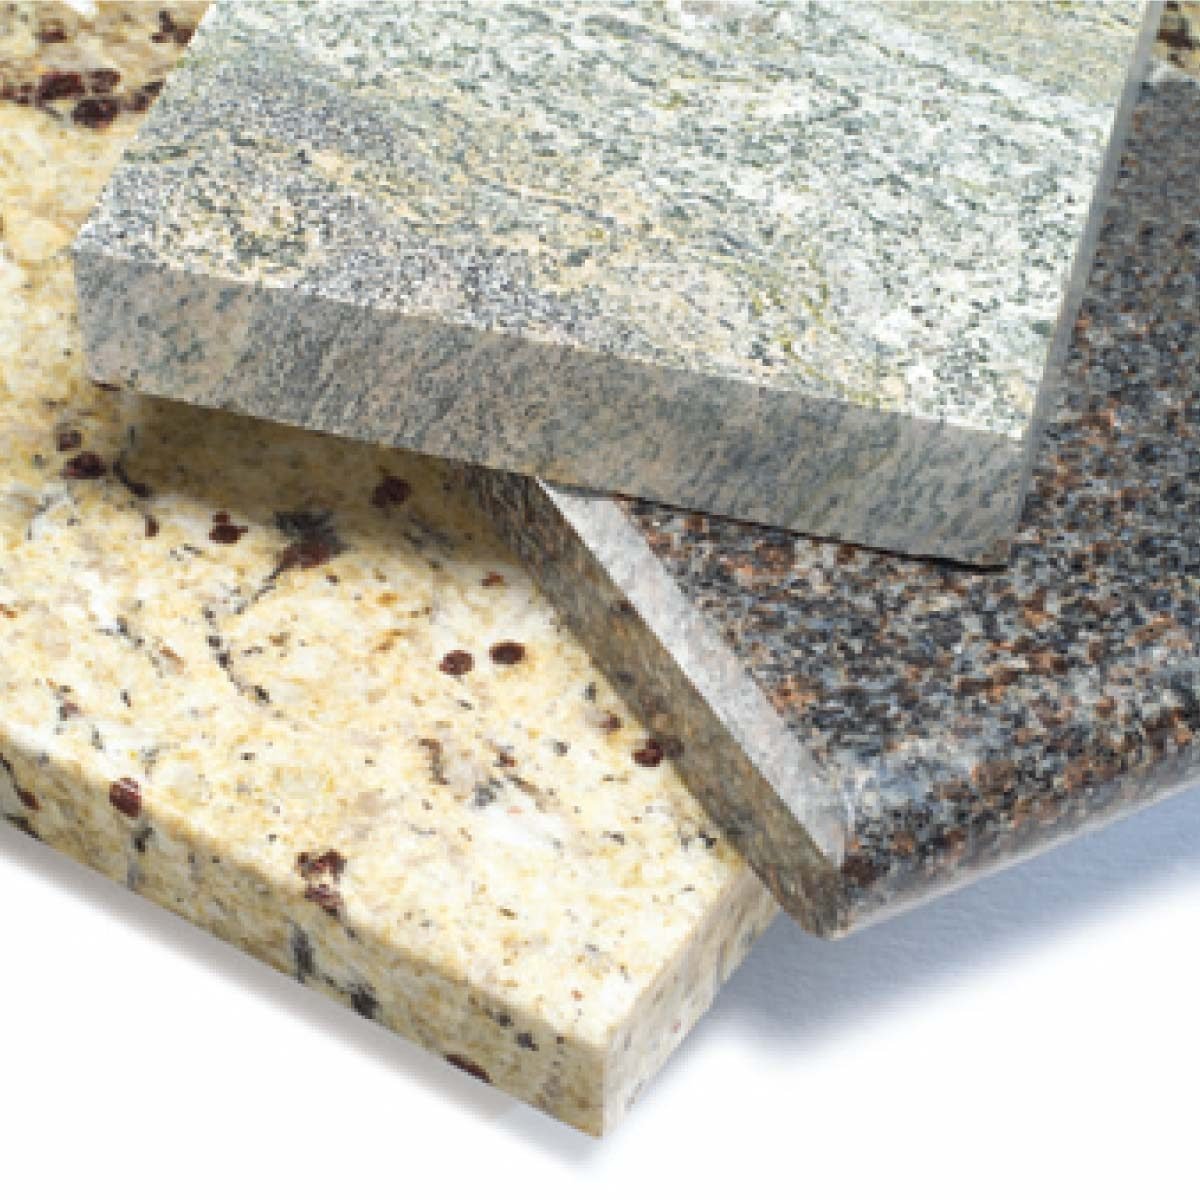 Buying Countertops Plastic Laminates Granite And Solid Surfaces